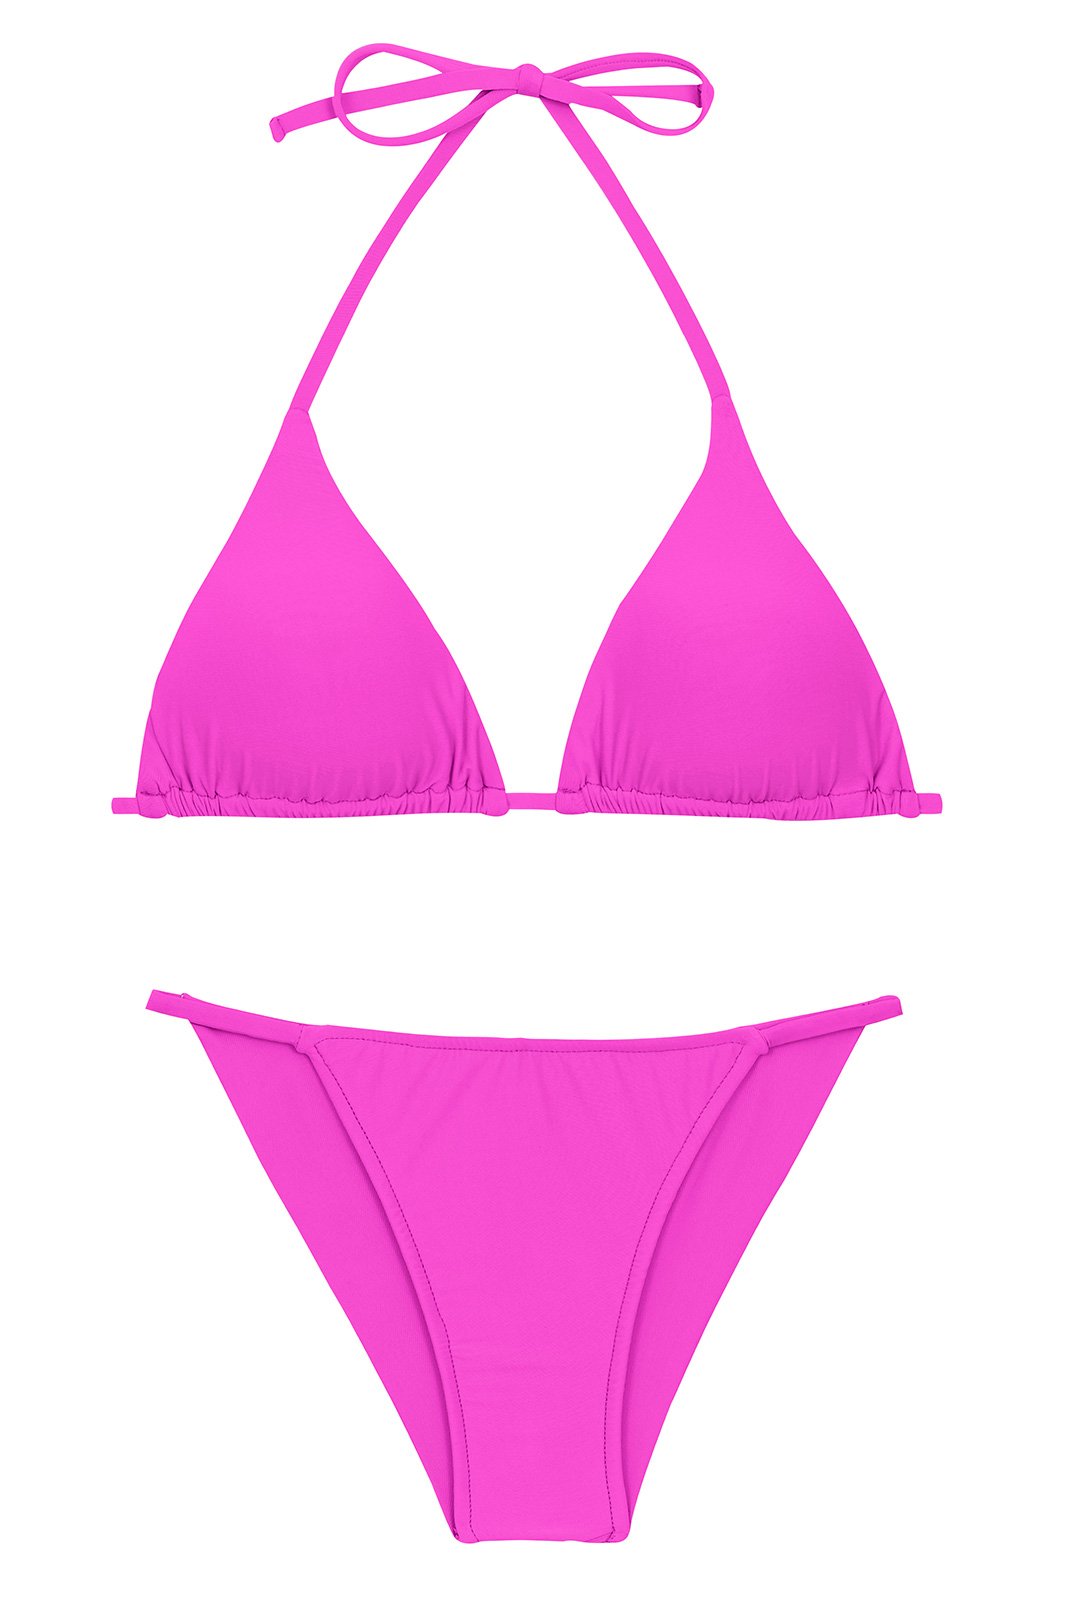 Magenta Pink Cheeky Brazilian Bikini With Slim Sides Set Uv Pink Tri